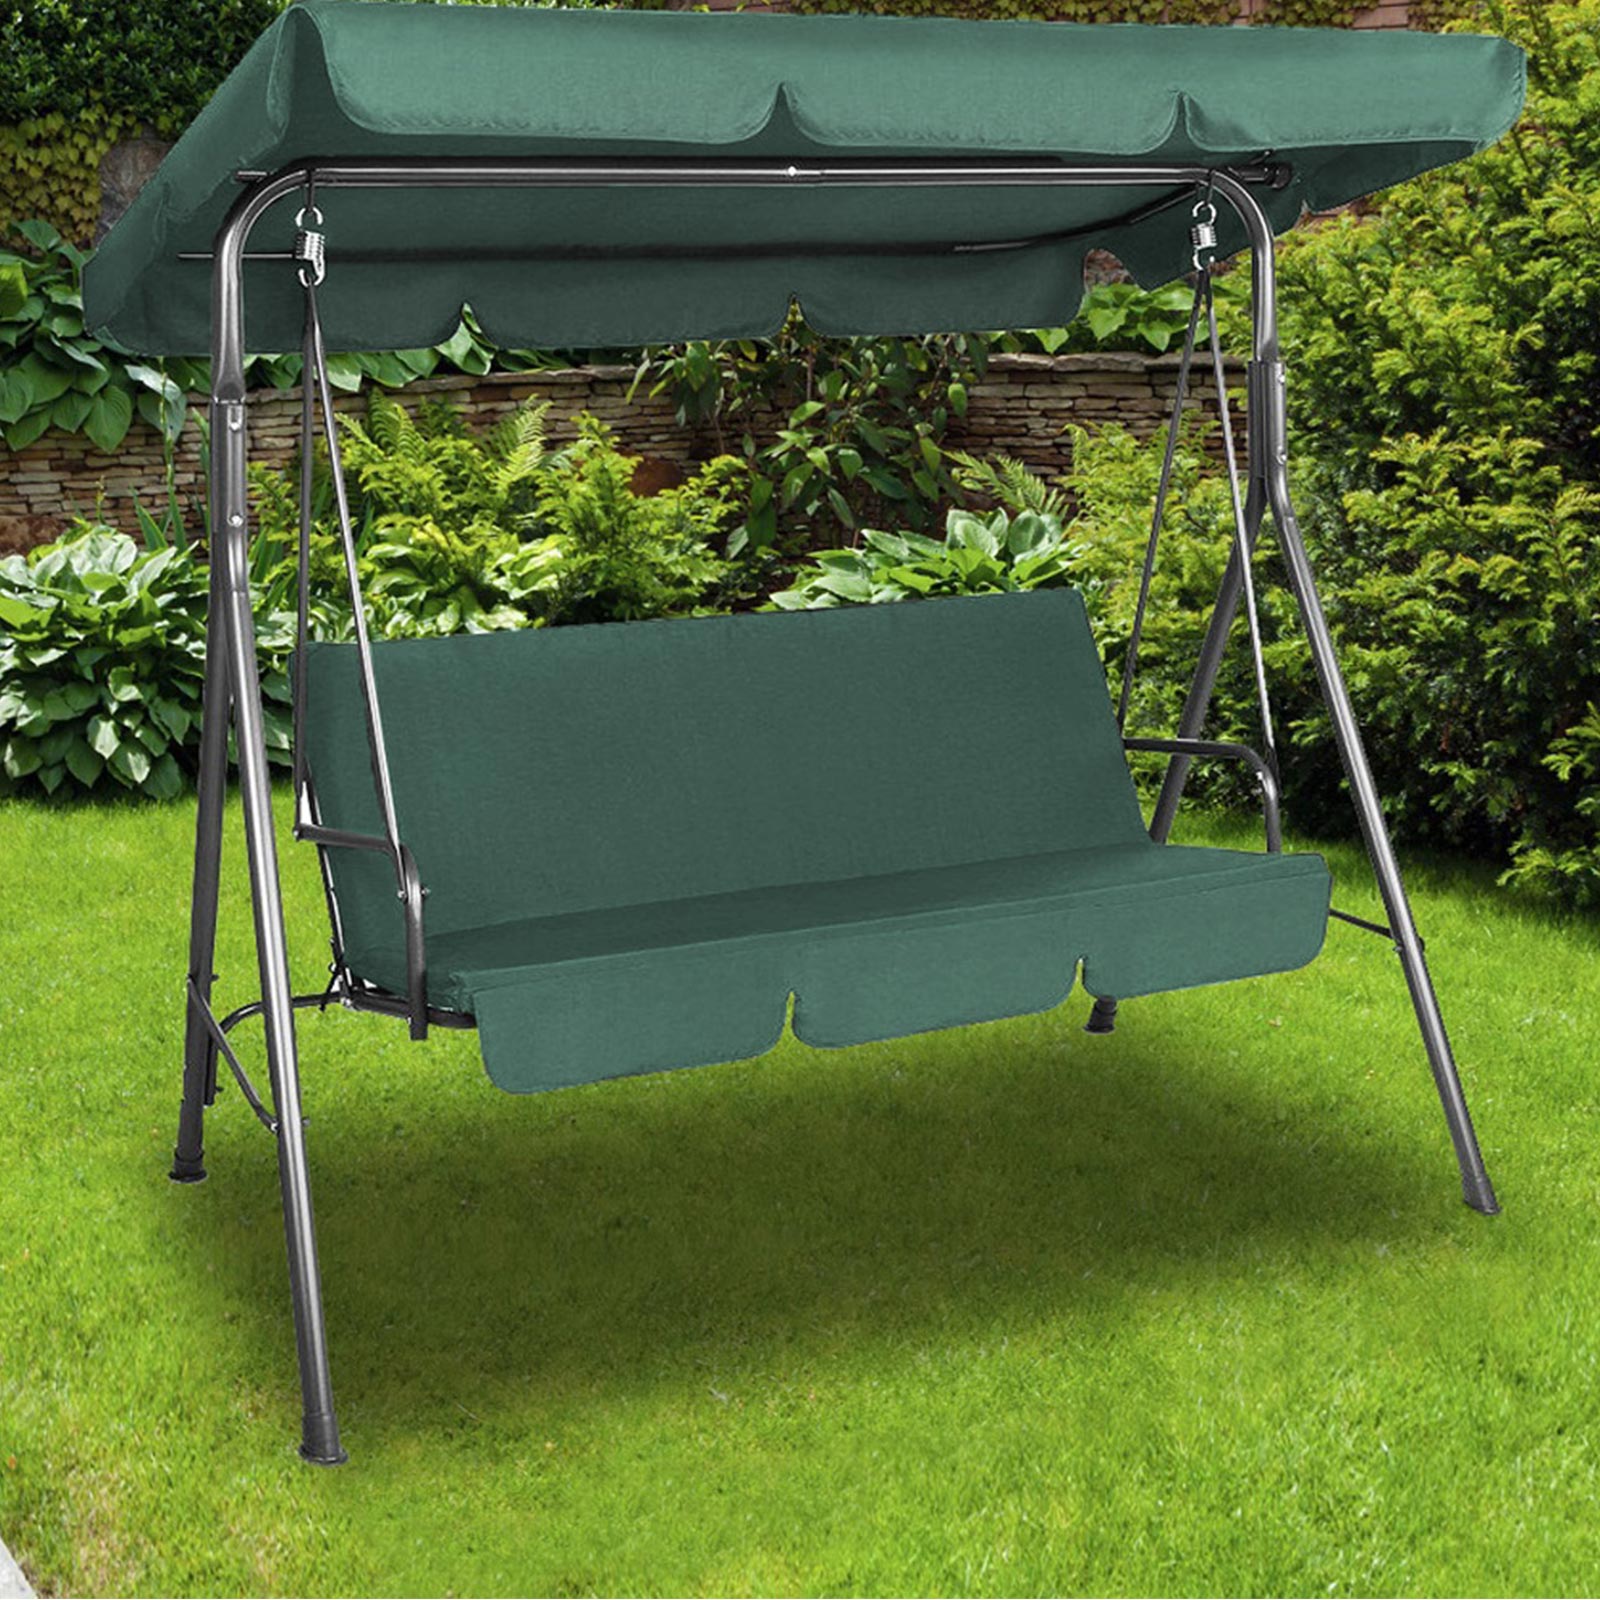 Milano Outdoor Swing Bench Seat Chair Canopy Furniture 3 Seater Garden Hammock - Dark Green - image3